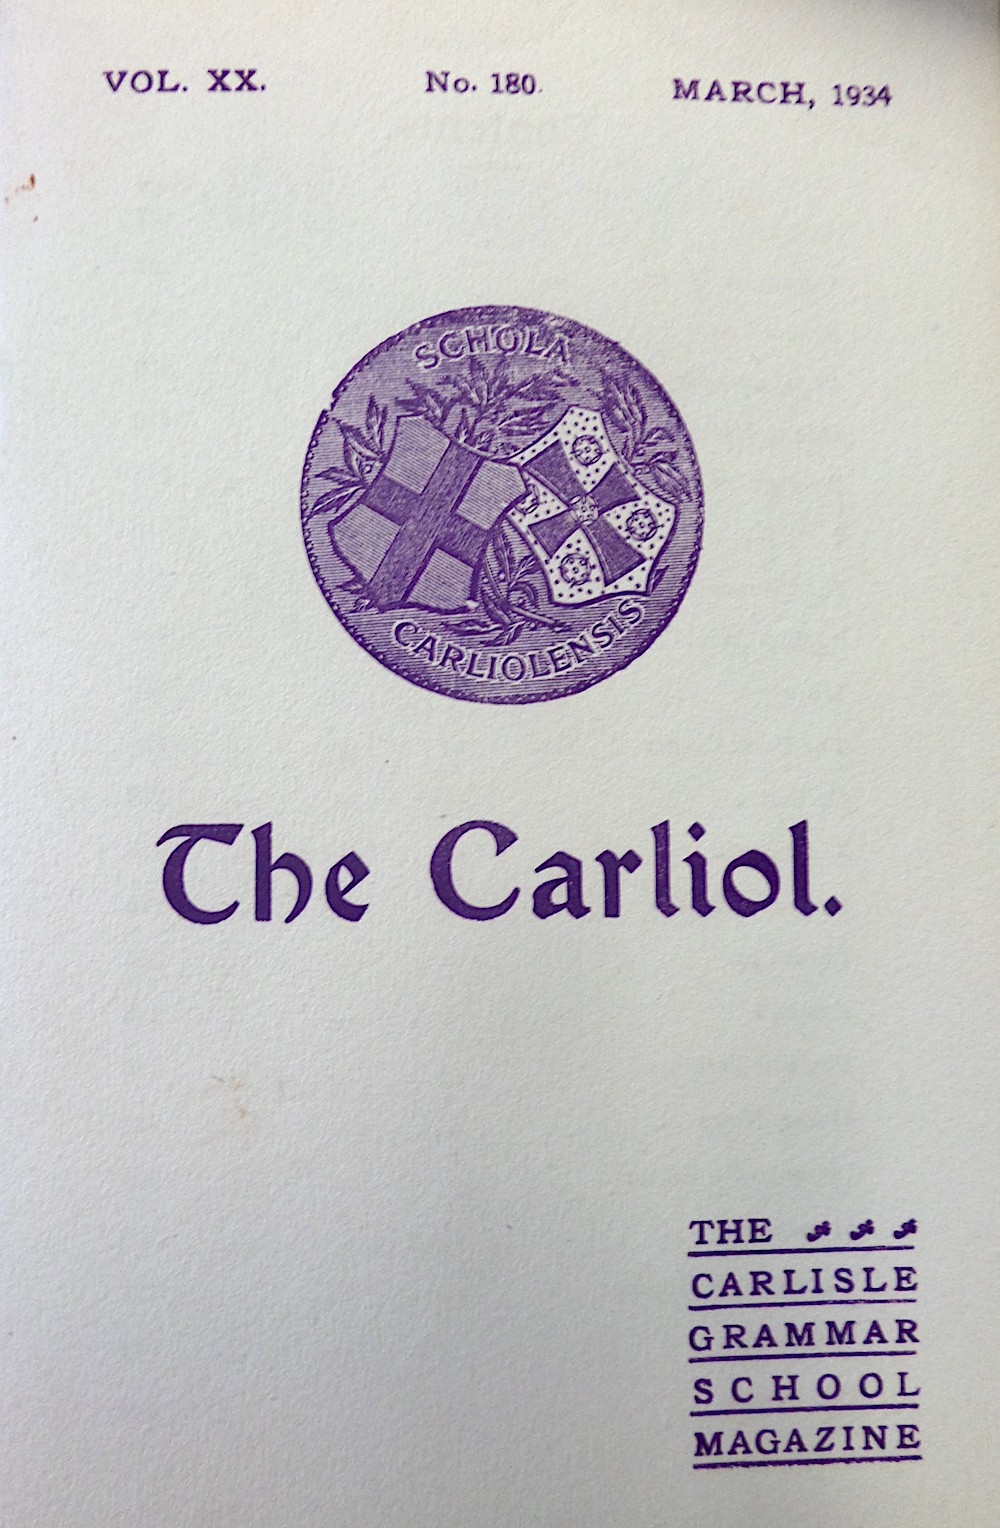 The Carliol, Mar 1934 Courtesy of Cumbria Archive Service, Archive ref: DS 4/1.